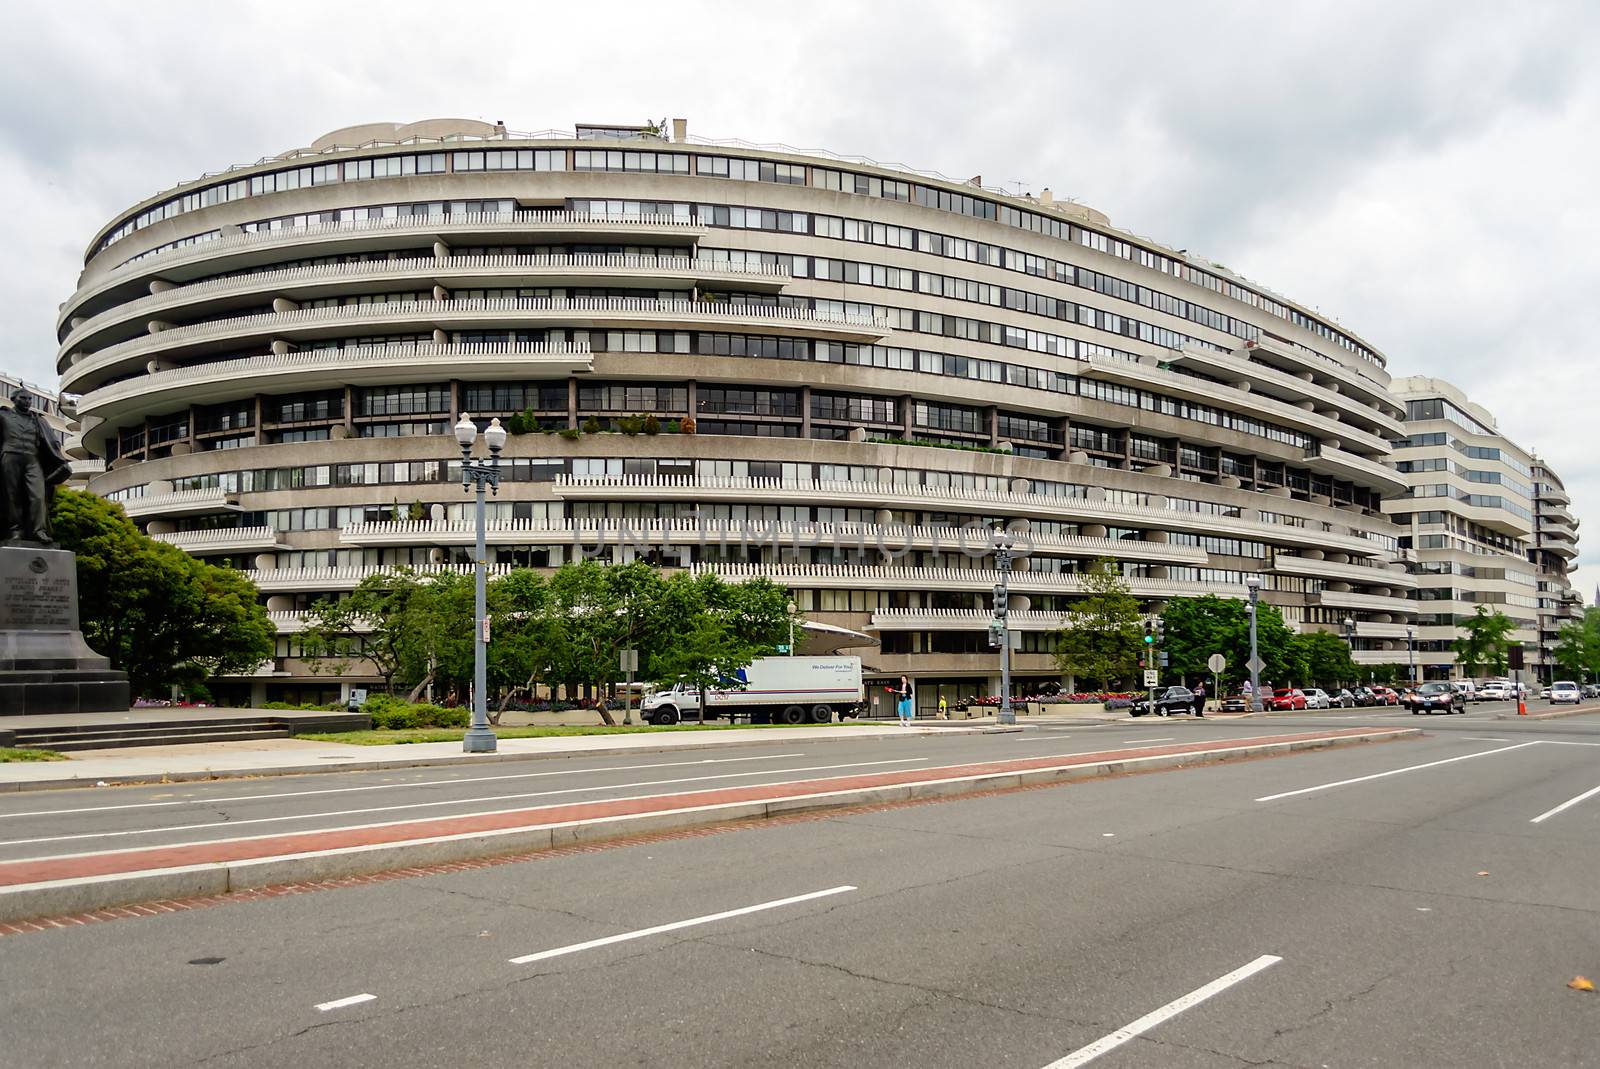 Watergate Complex, Washington DC by marcorubino